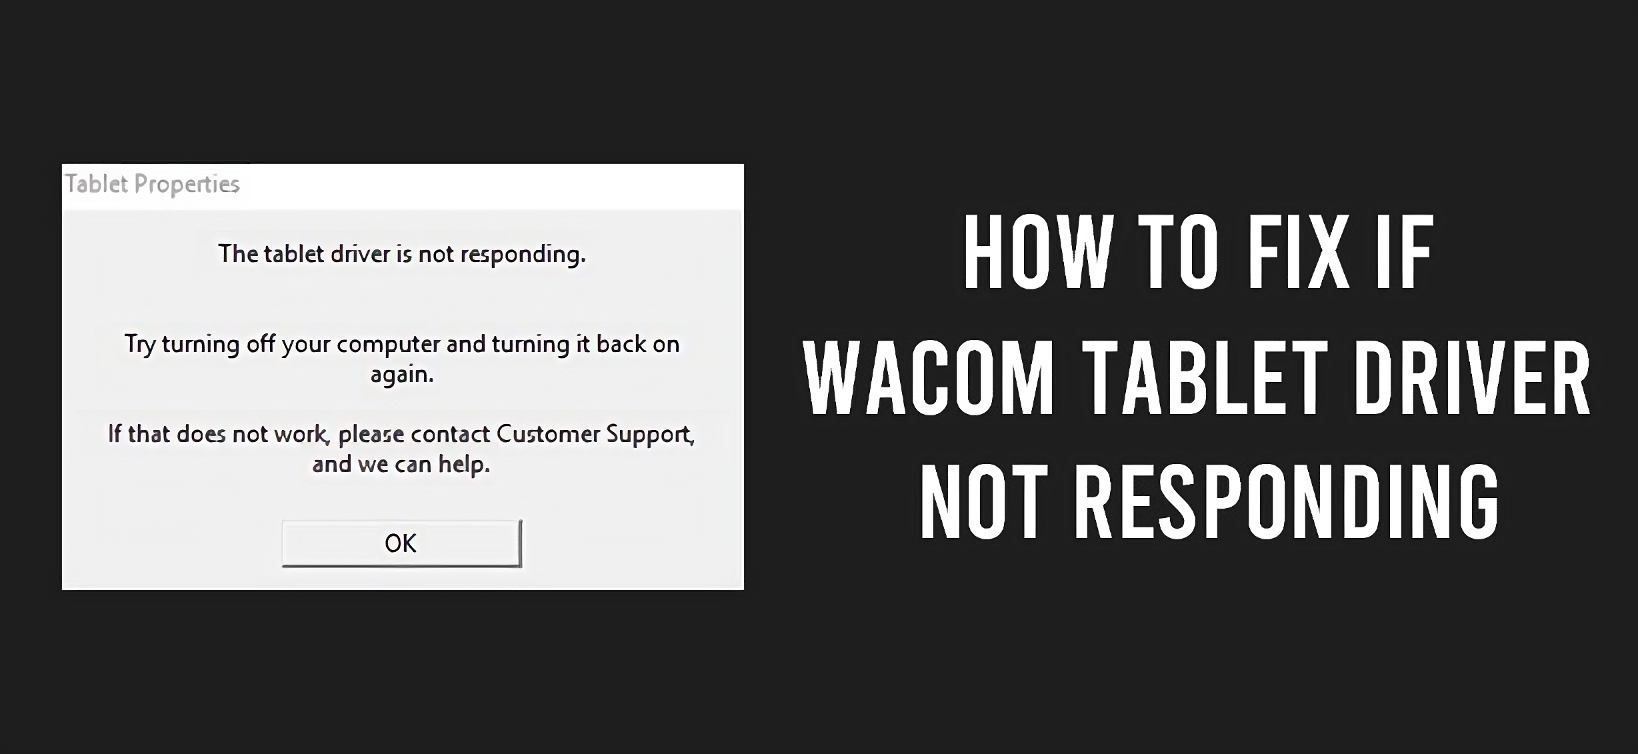 how-to-fix-wacom-tablet-driver-not-responding